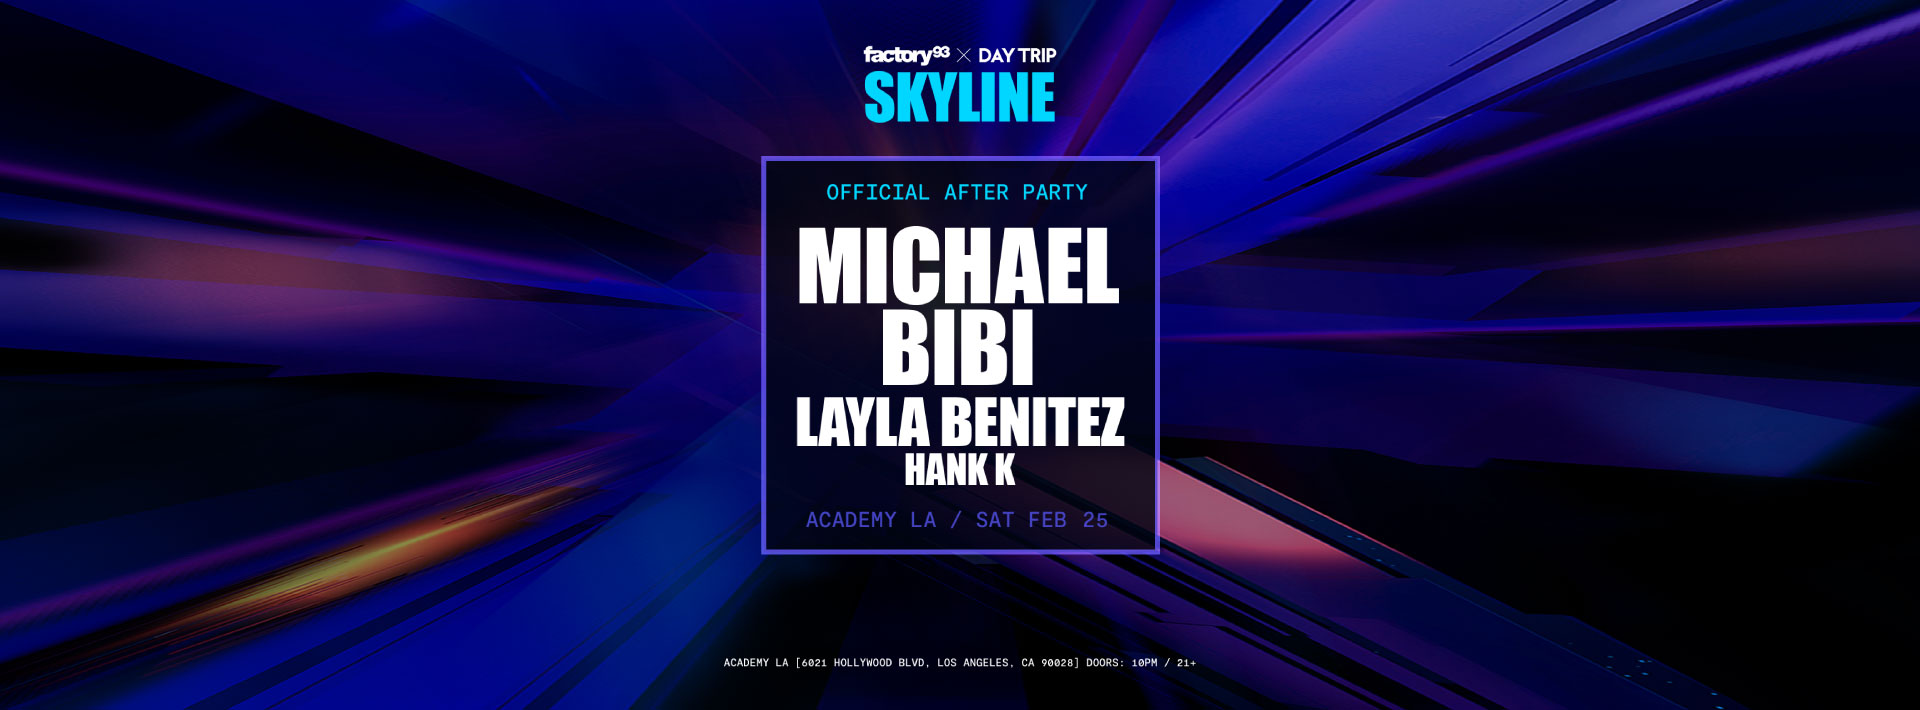 Skyline Afterparty: Michael Bibi